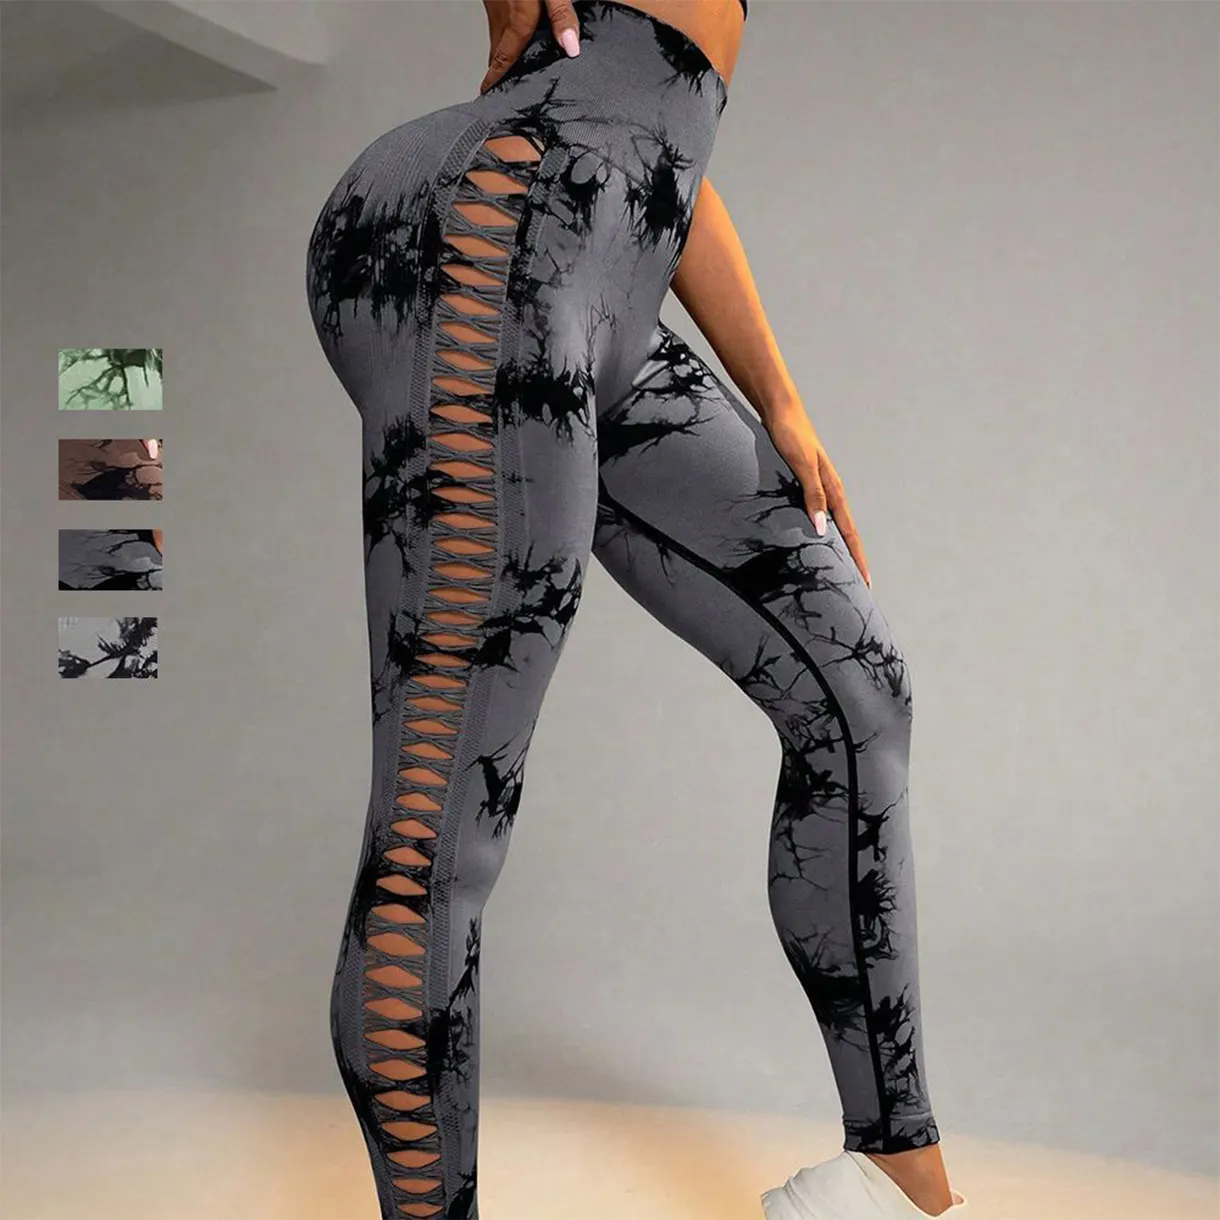 Großhandel individuelle Fabrik Direktverkauf OEM hohe taille gefärbt für Damen Fitness Sporthosen Yoga-Leggings